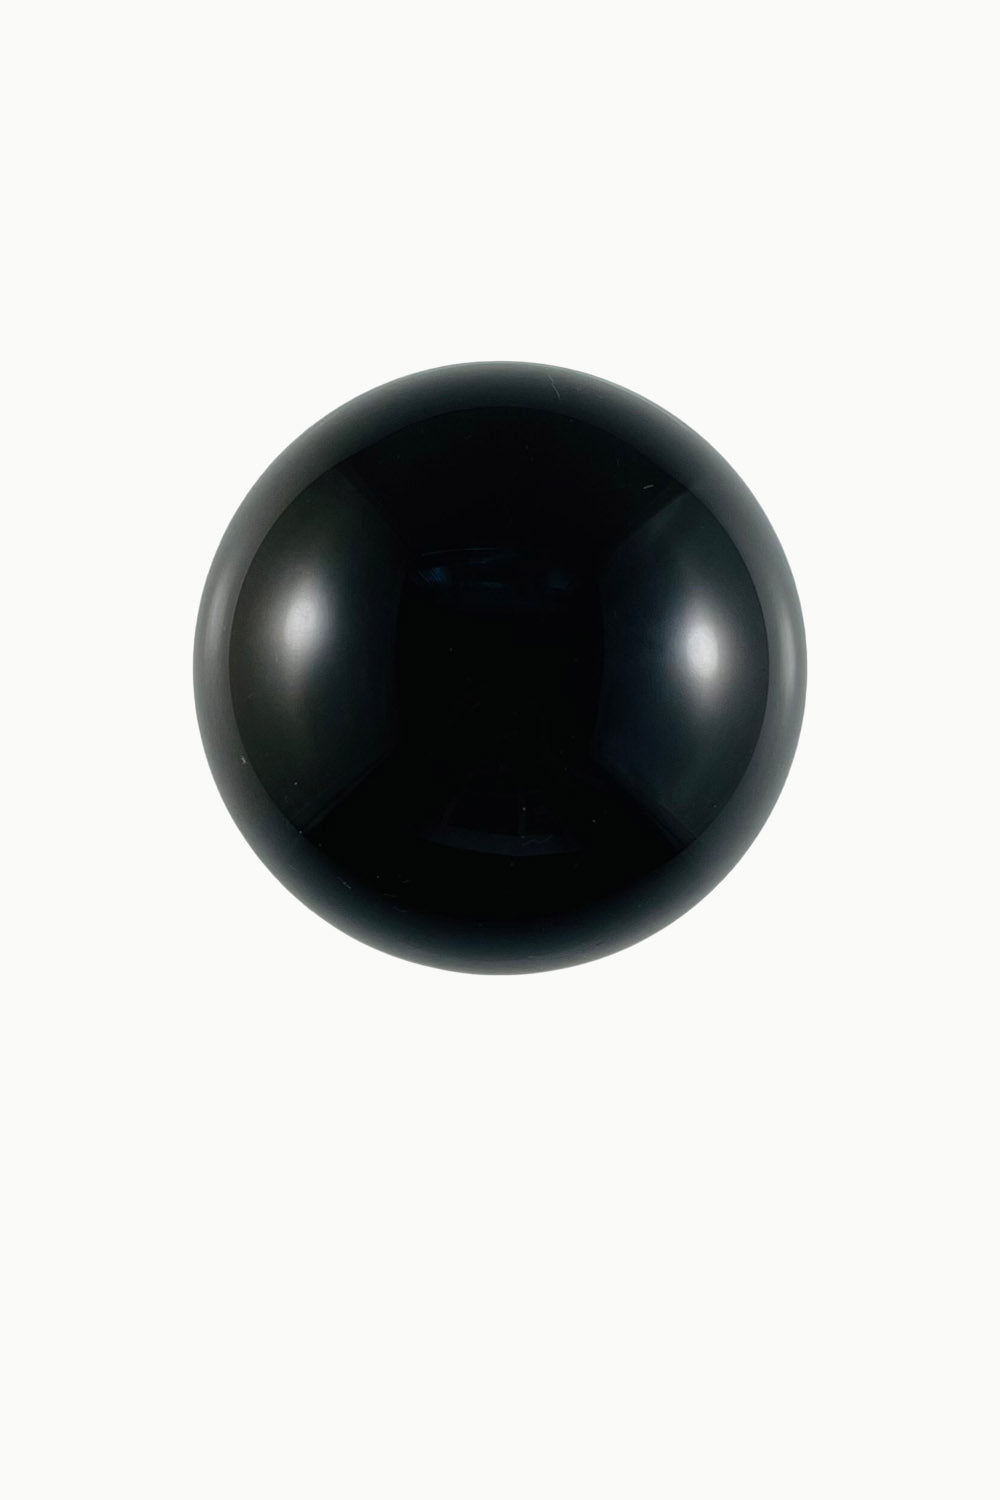 Black Obsidian Sphere #1